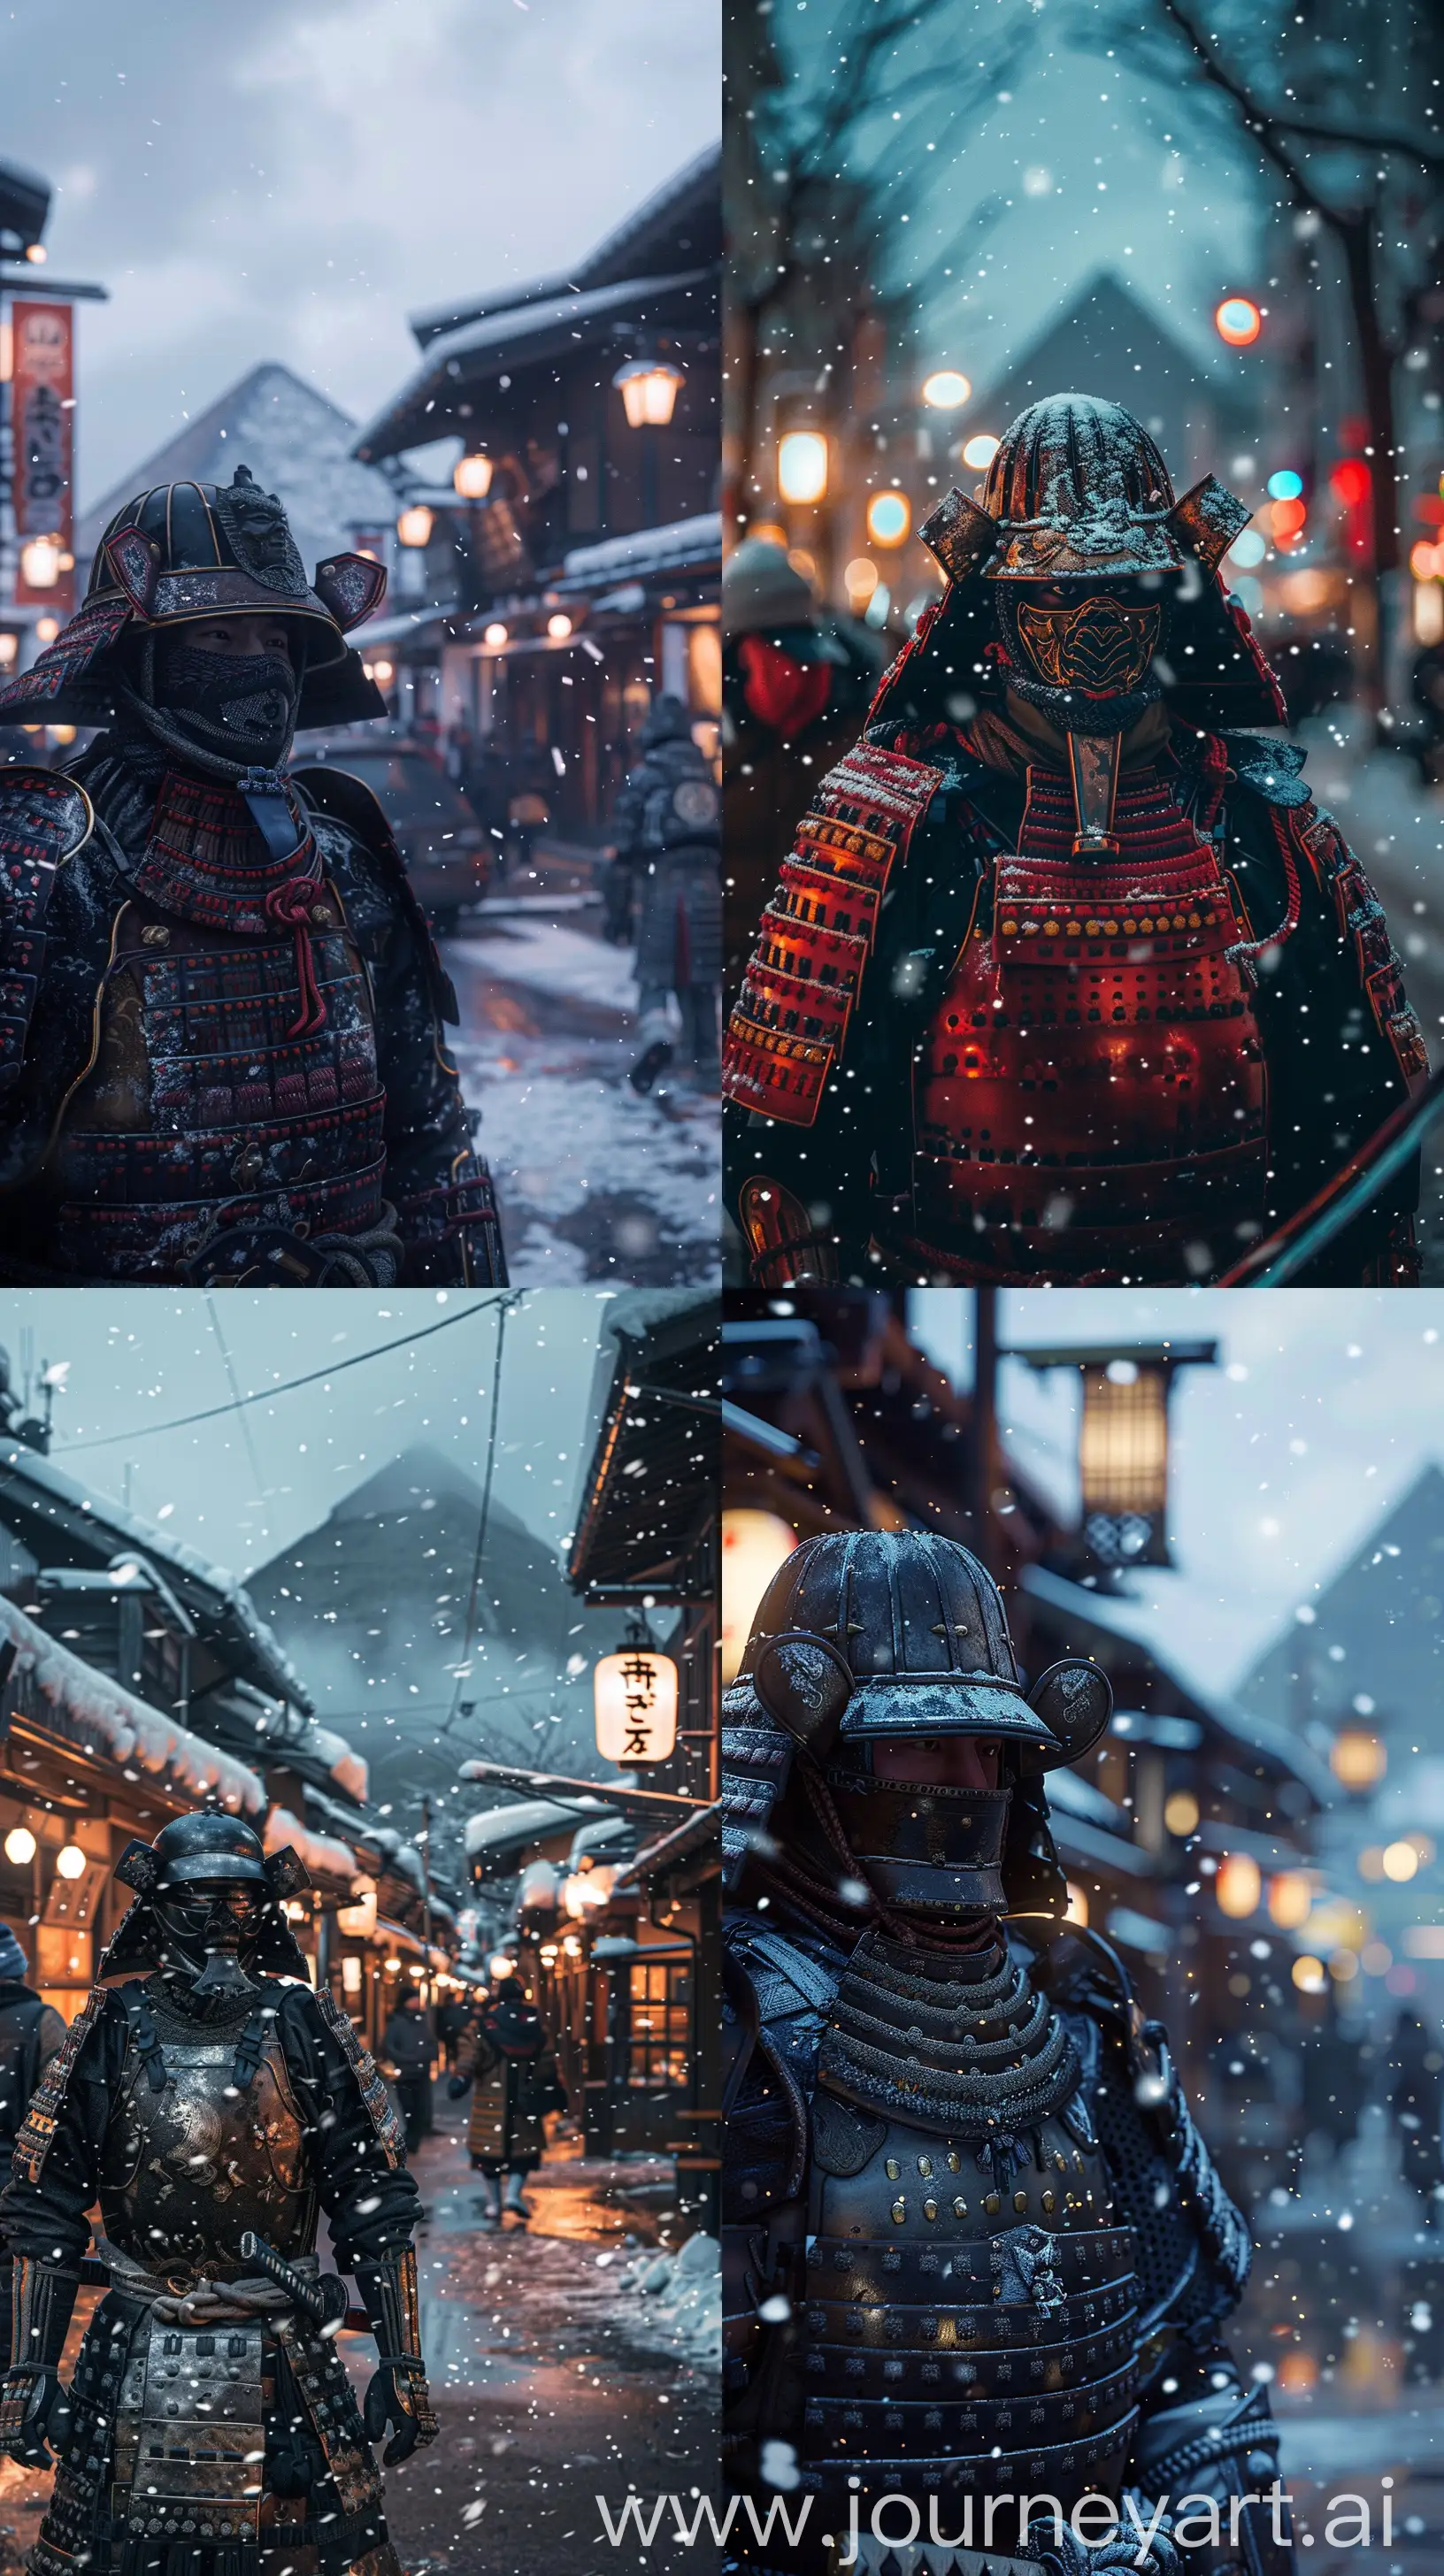 Armored-Human-in-Snowy-Evening-at-Otaru-Pyramids-Street